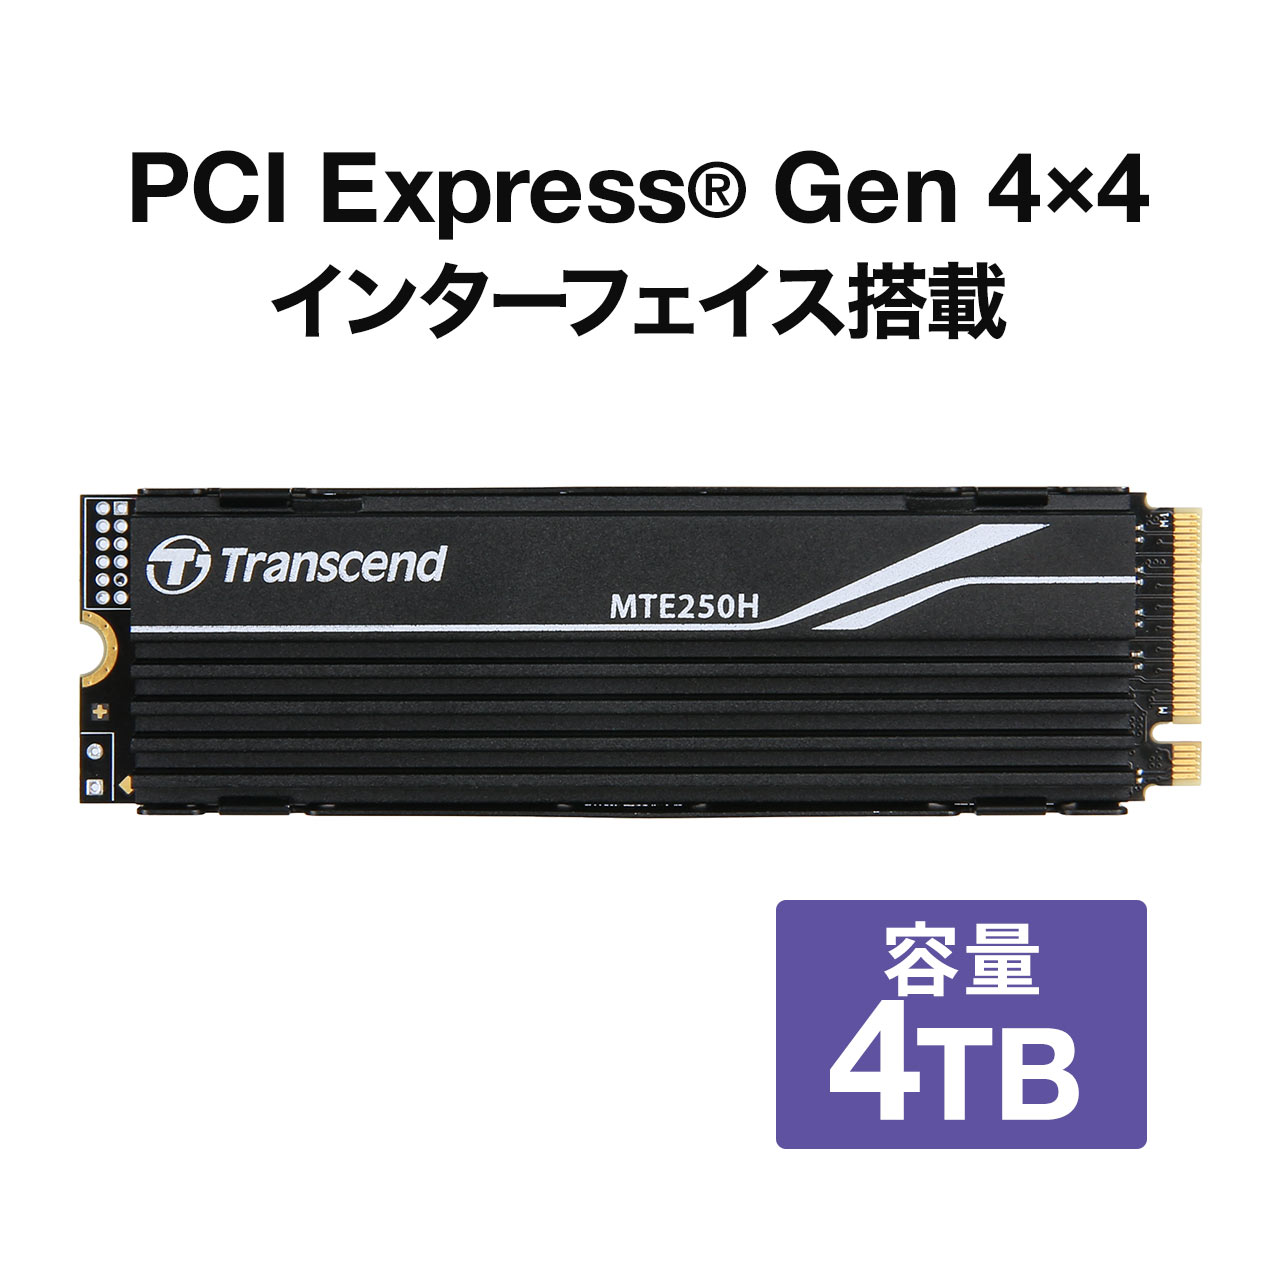 PCIe SSD 250H  PCIe M.2 SSDs - Transcend Information, Inc.